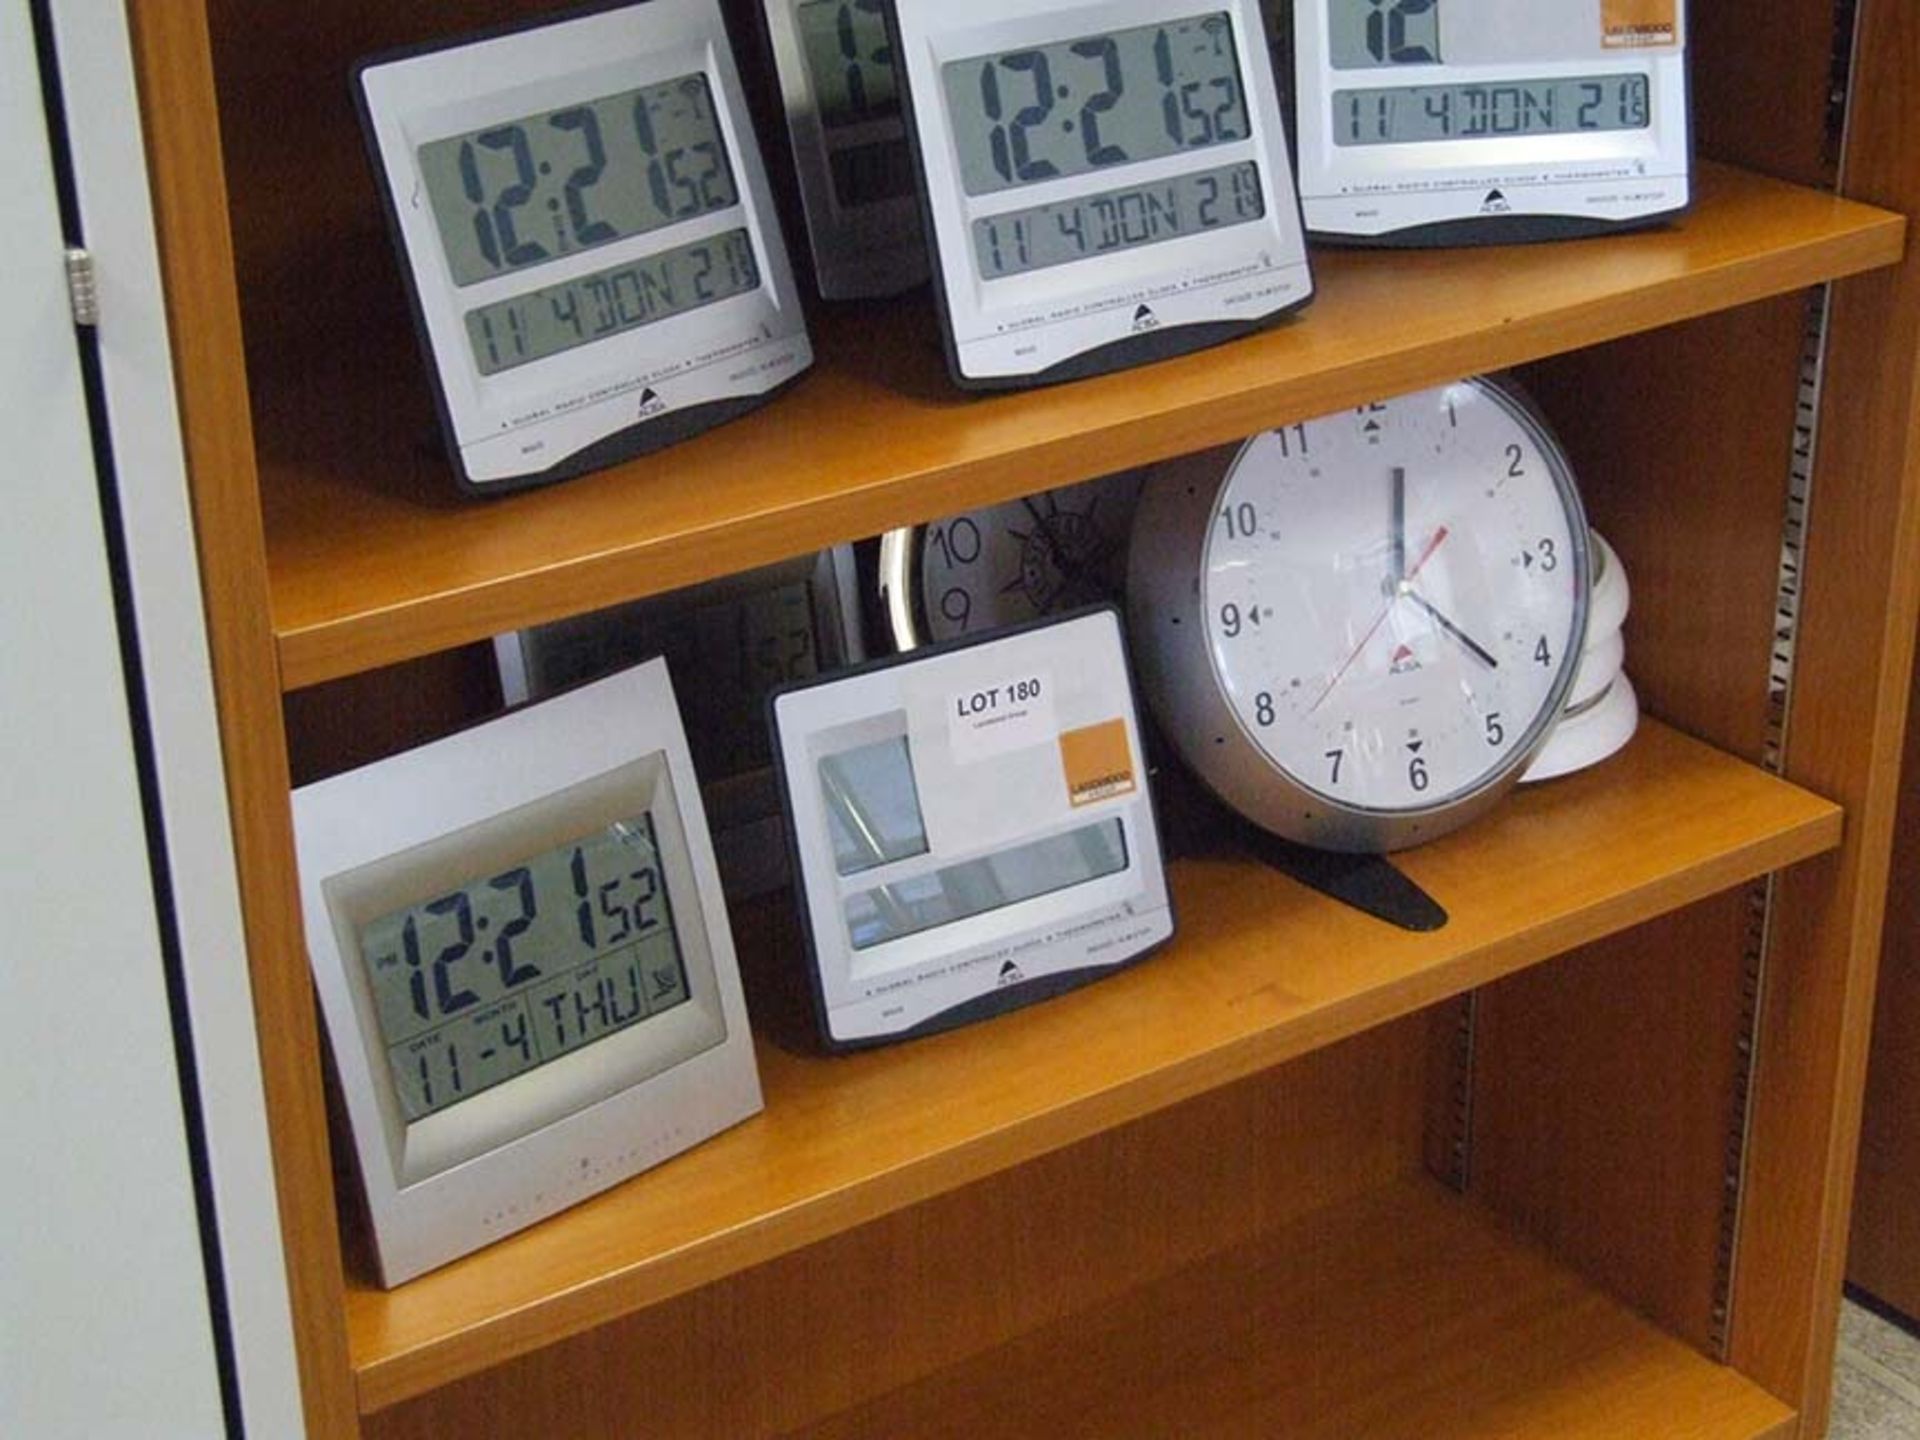 8 Clocks some digital others analogue on one shelf